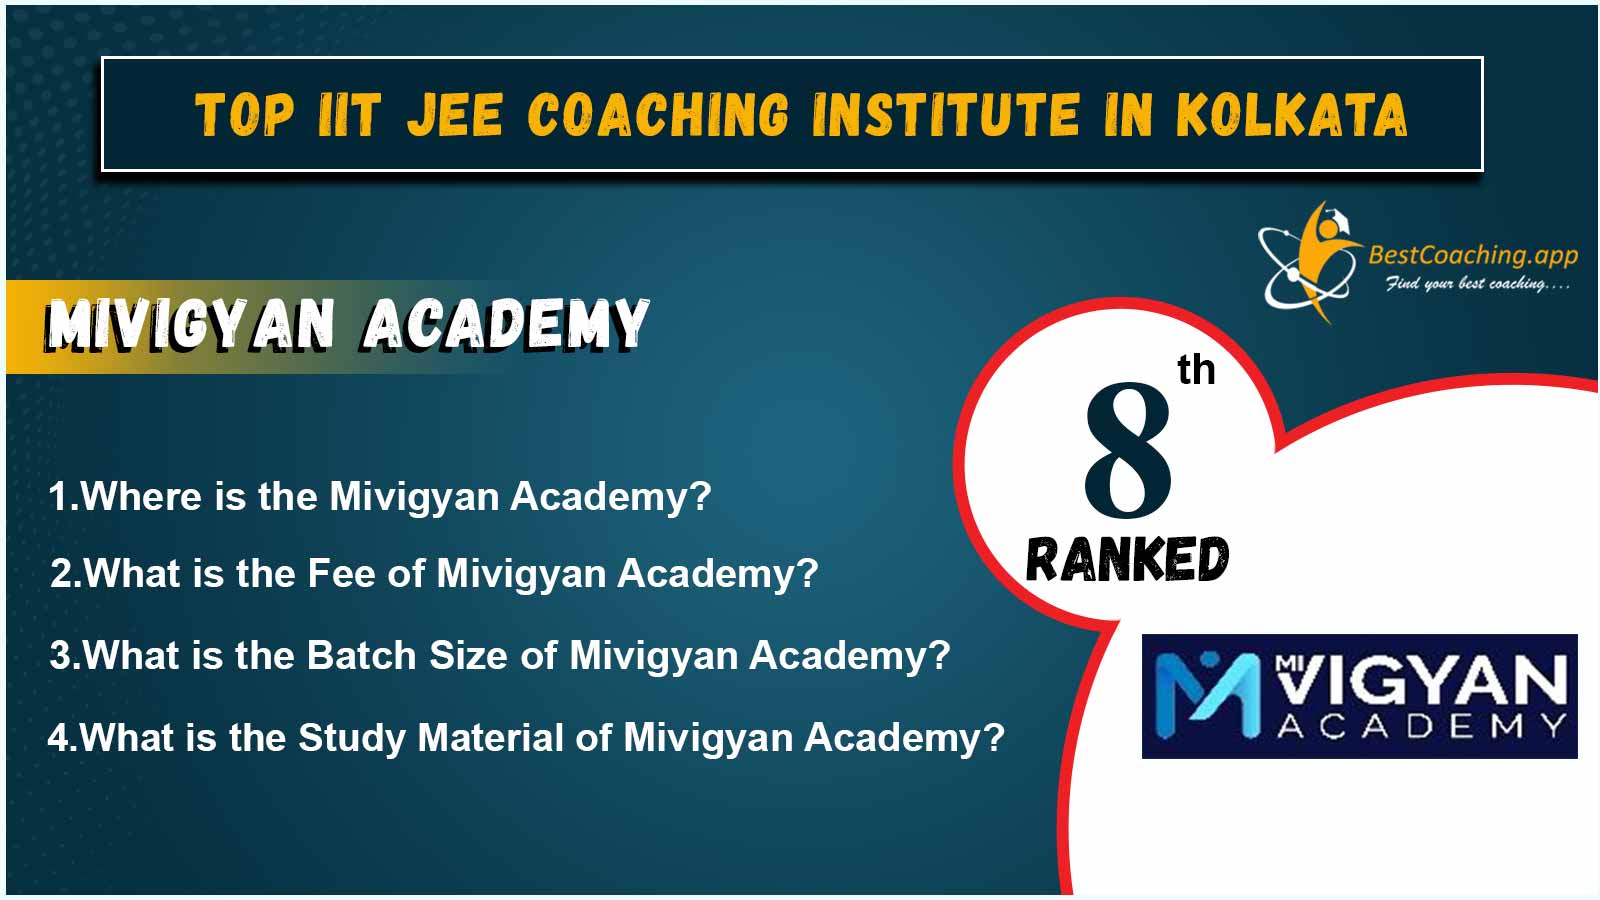 IIT JEE Coaching of Kolkata